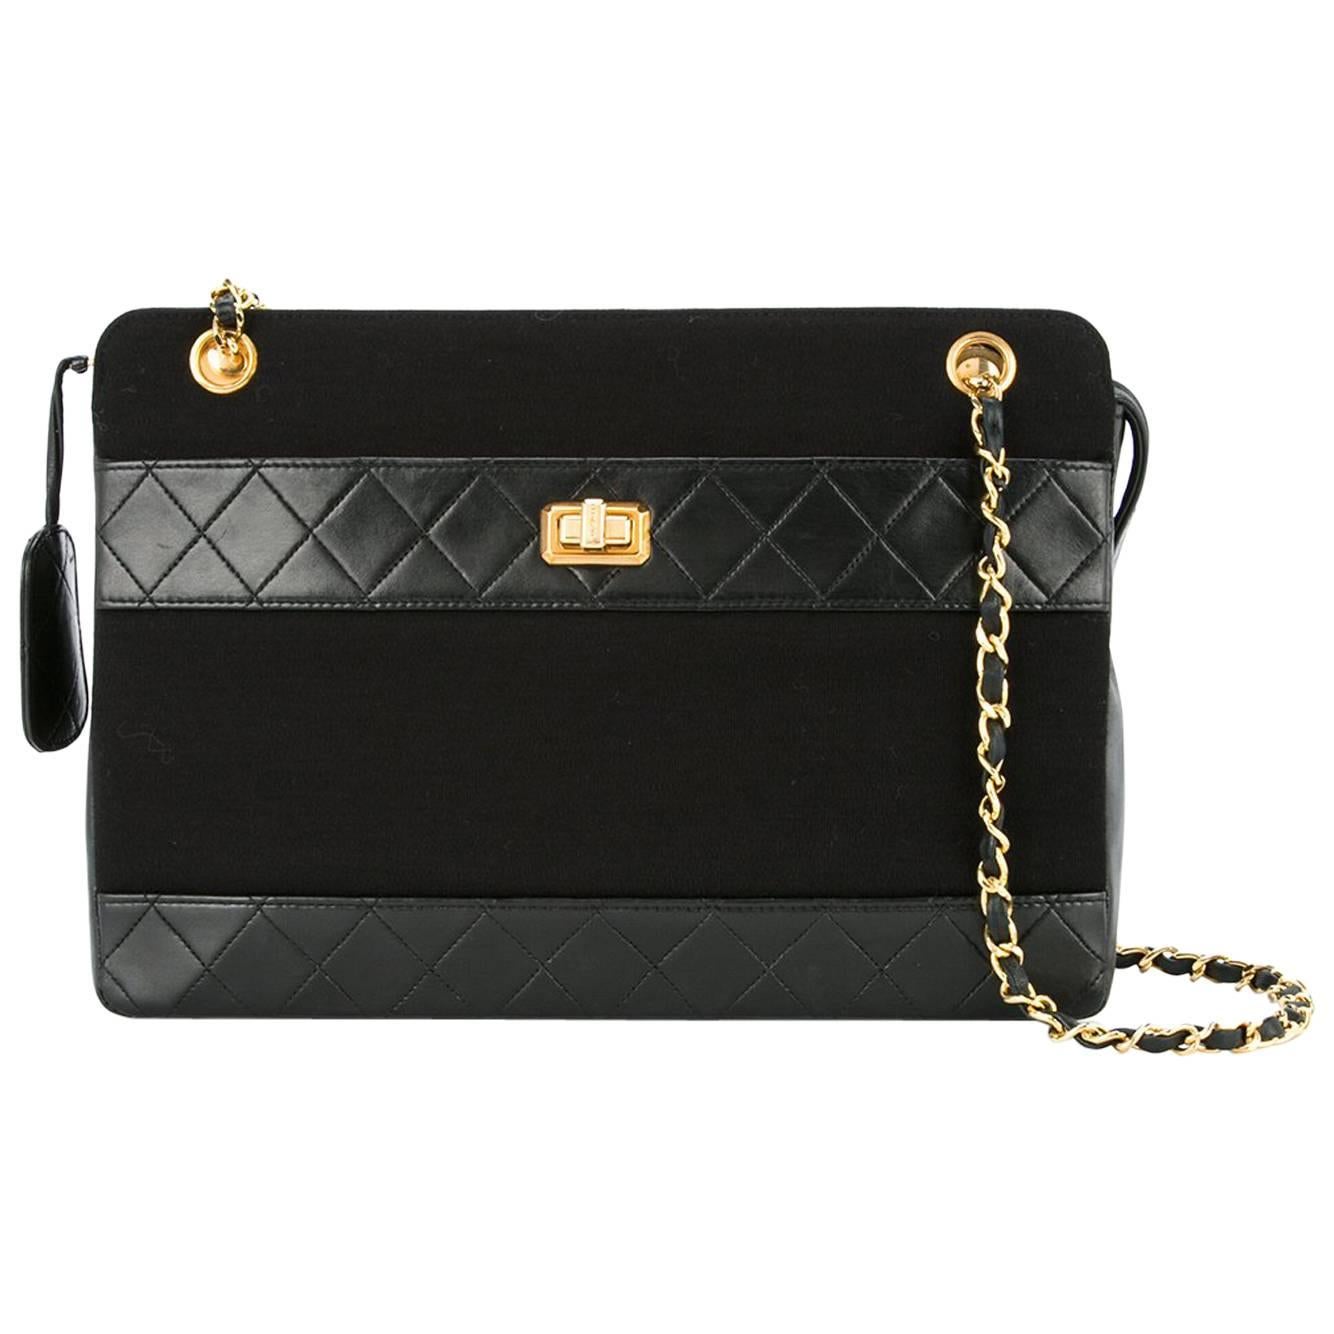 Chanel Black Leather Fabric Turnlock Square Shoulder Bag 